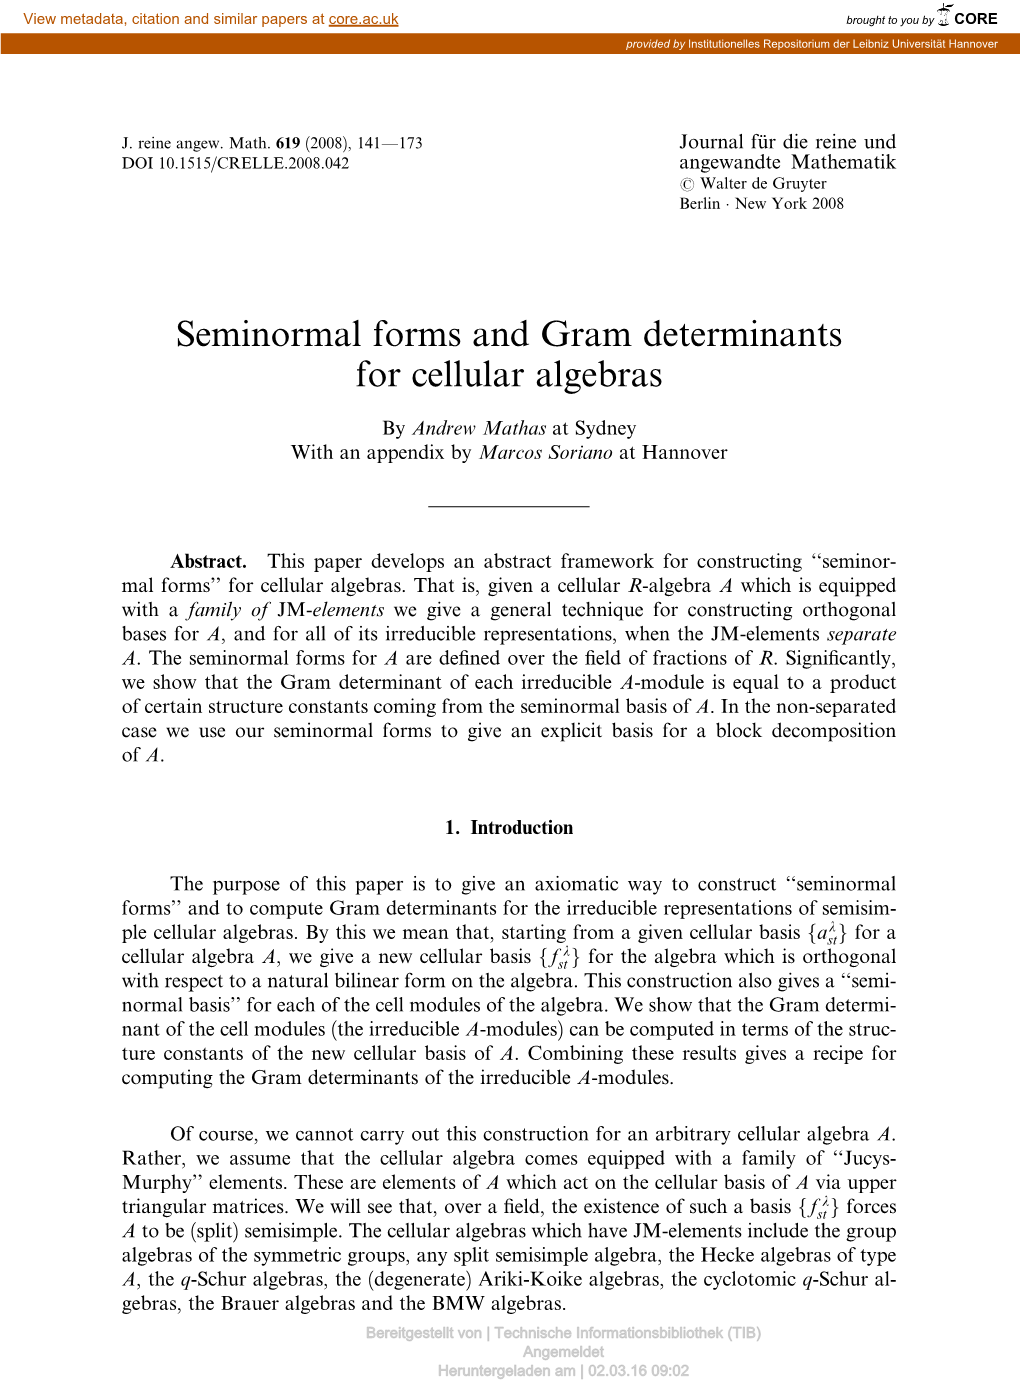 Seminormal Forms and Gram Determinants for Cellular Algebras